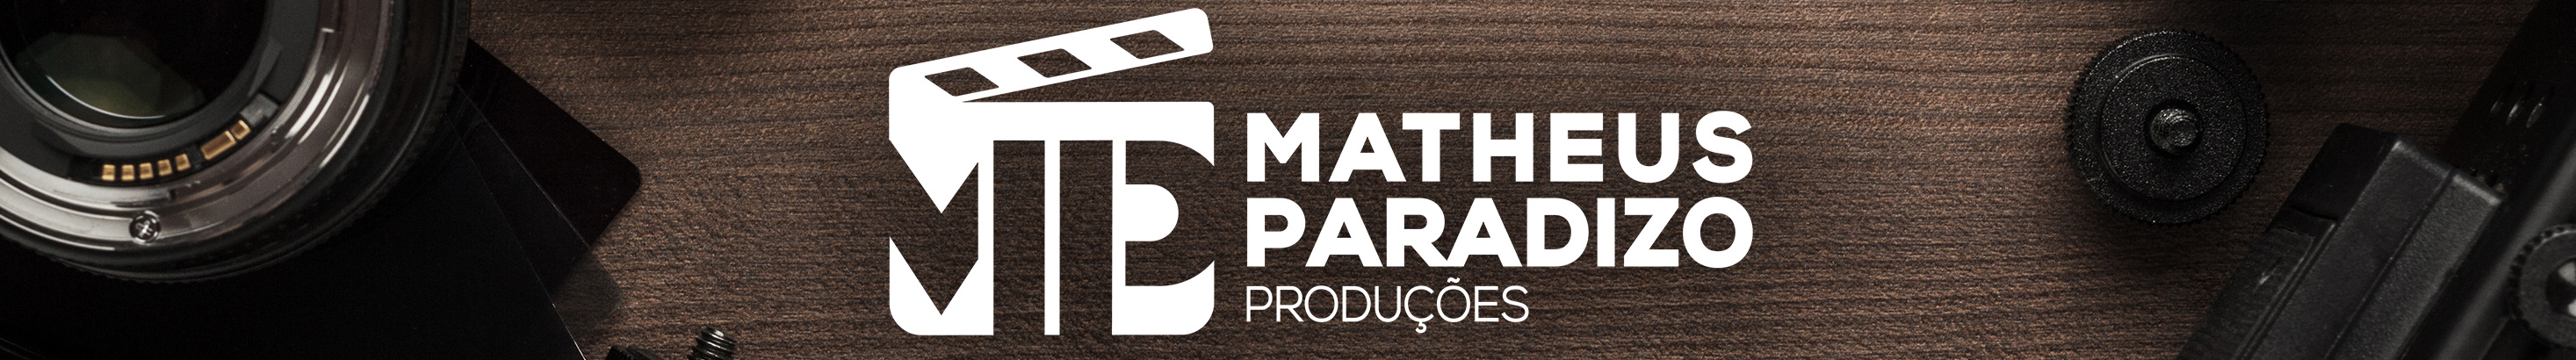 Matheus Paradizo's profile banner